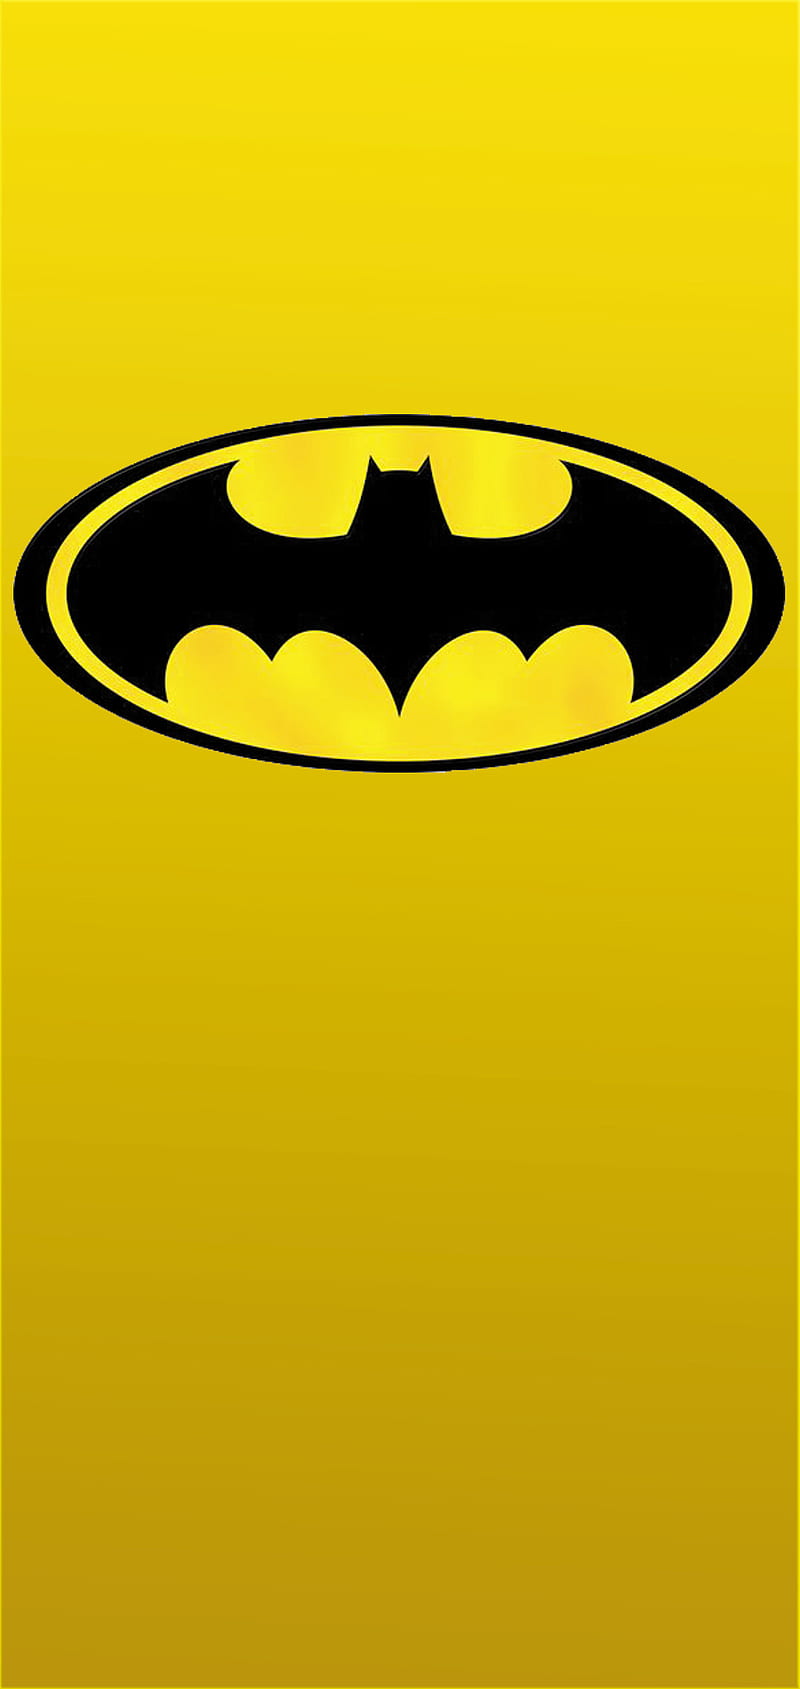 Batman Yellow Wallpapers  Batman wallpaper, Dc comics wallpaper, Batman  wallpaper iphone